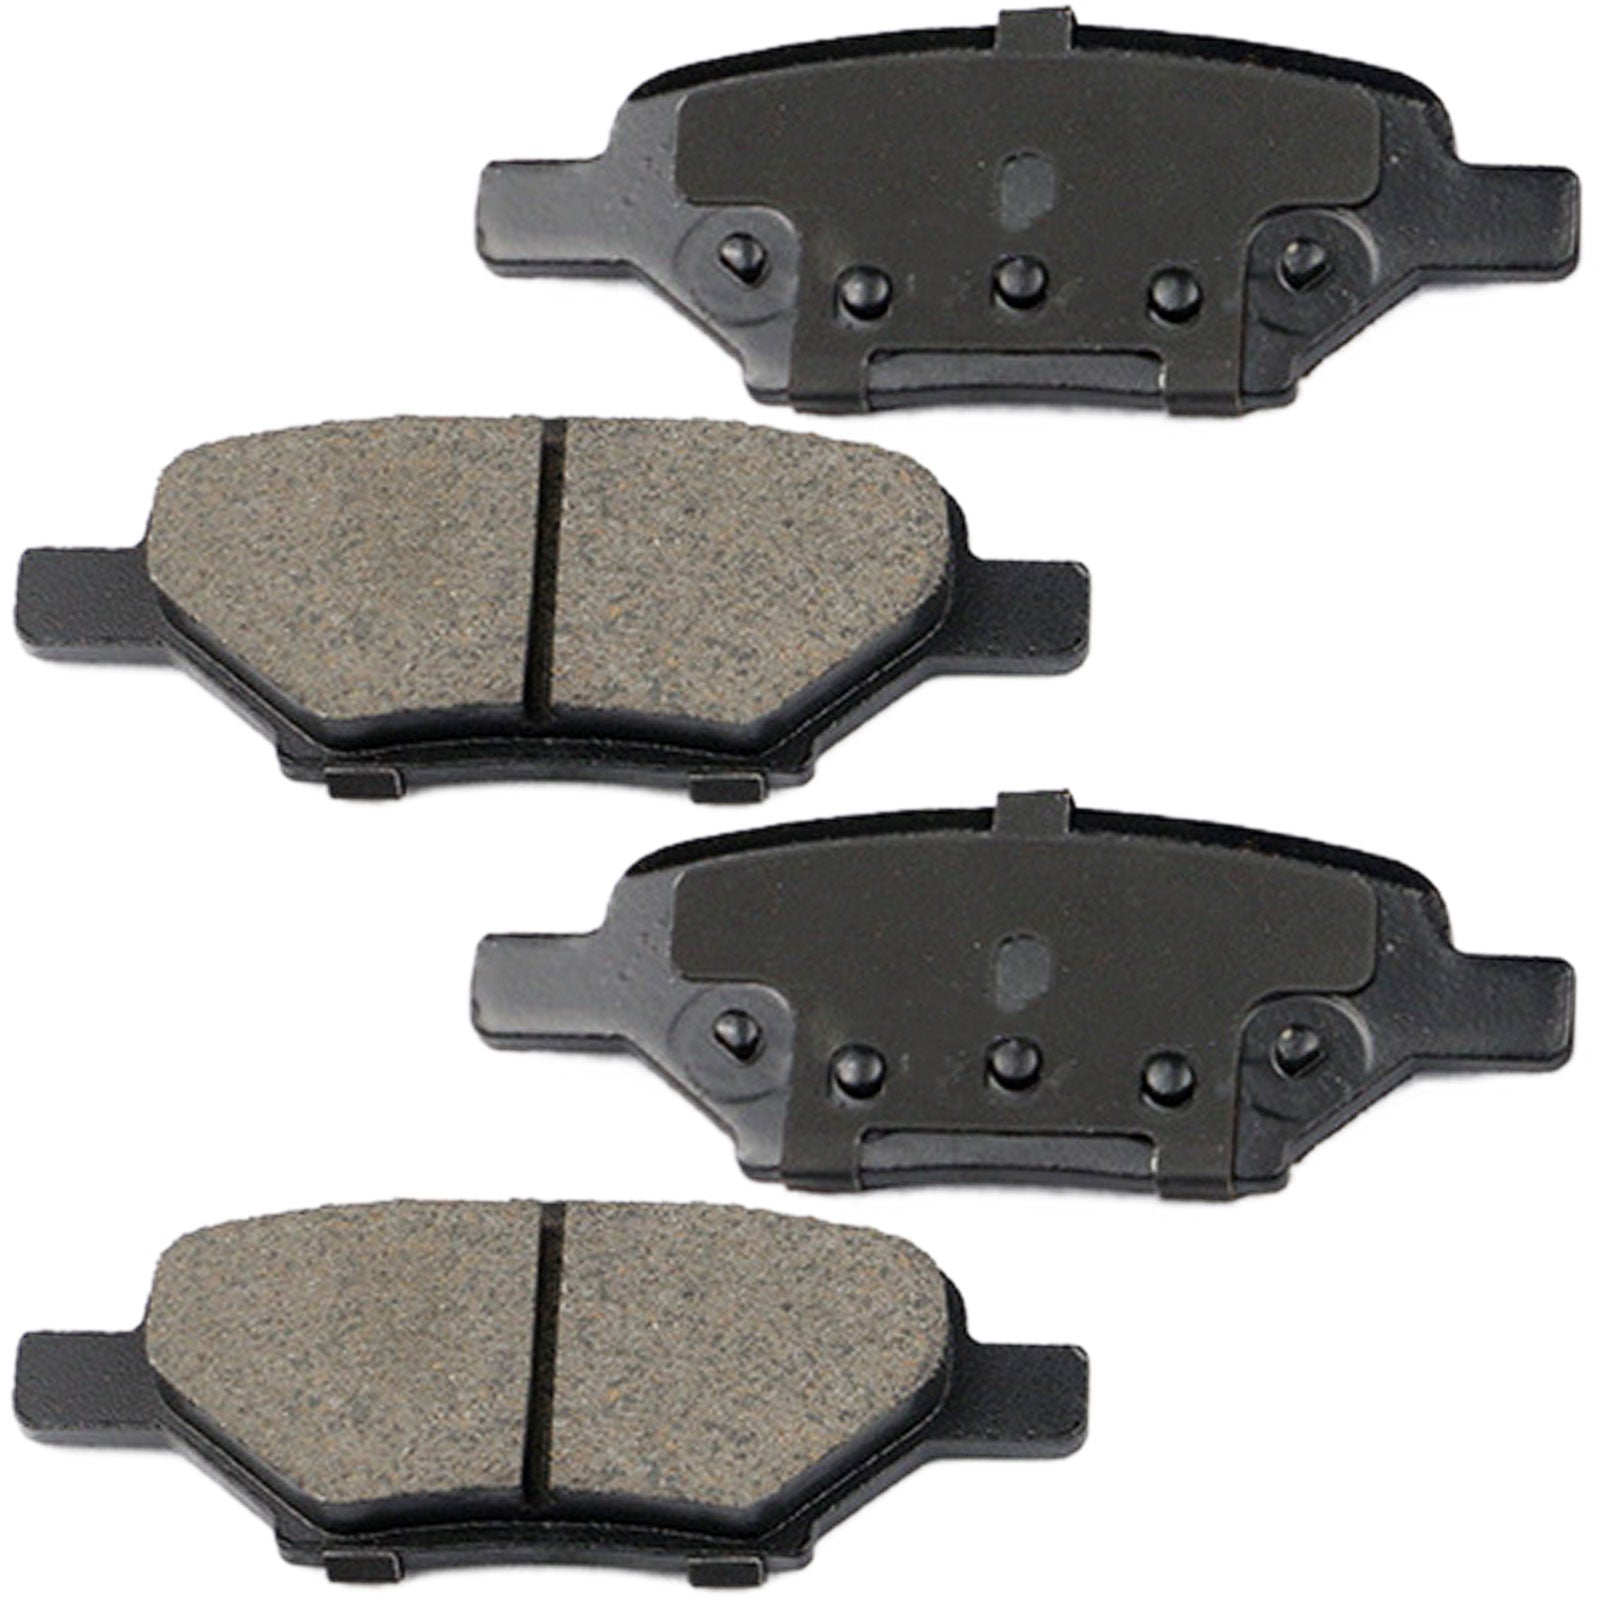 Rear Ceramic Brake Pads w/Hardware Kits Fits for Chevolet Cobalt HHR Malibu, Pontiac G5 G6, Saturn Aura Ion-Ceramic Low Dust Brake Pad-4 Pack MotorbyMotor